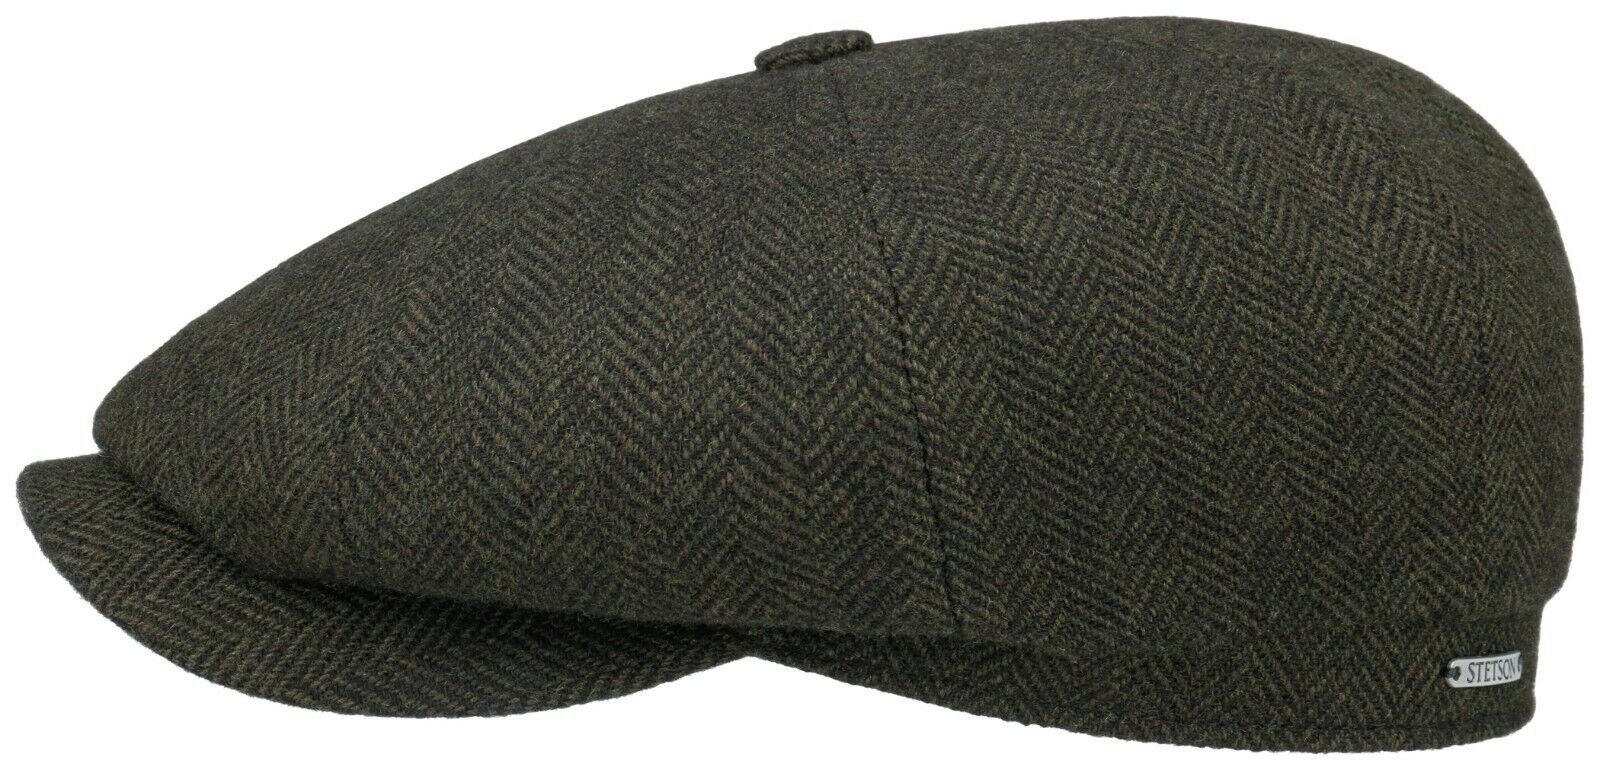 Stetson Ballonmütze Hatteras Classic Grün Wool Wolle aus